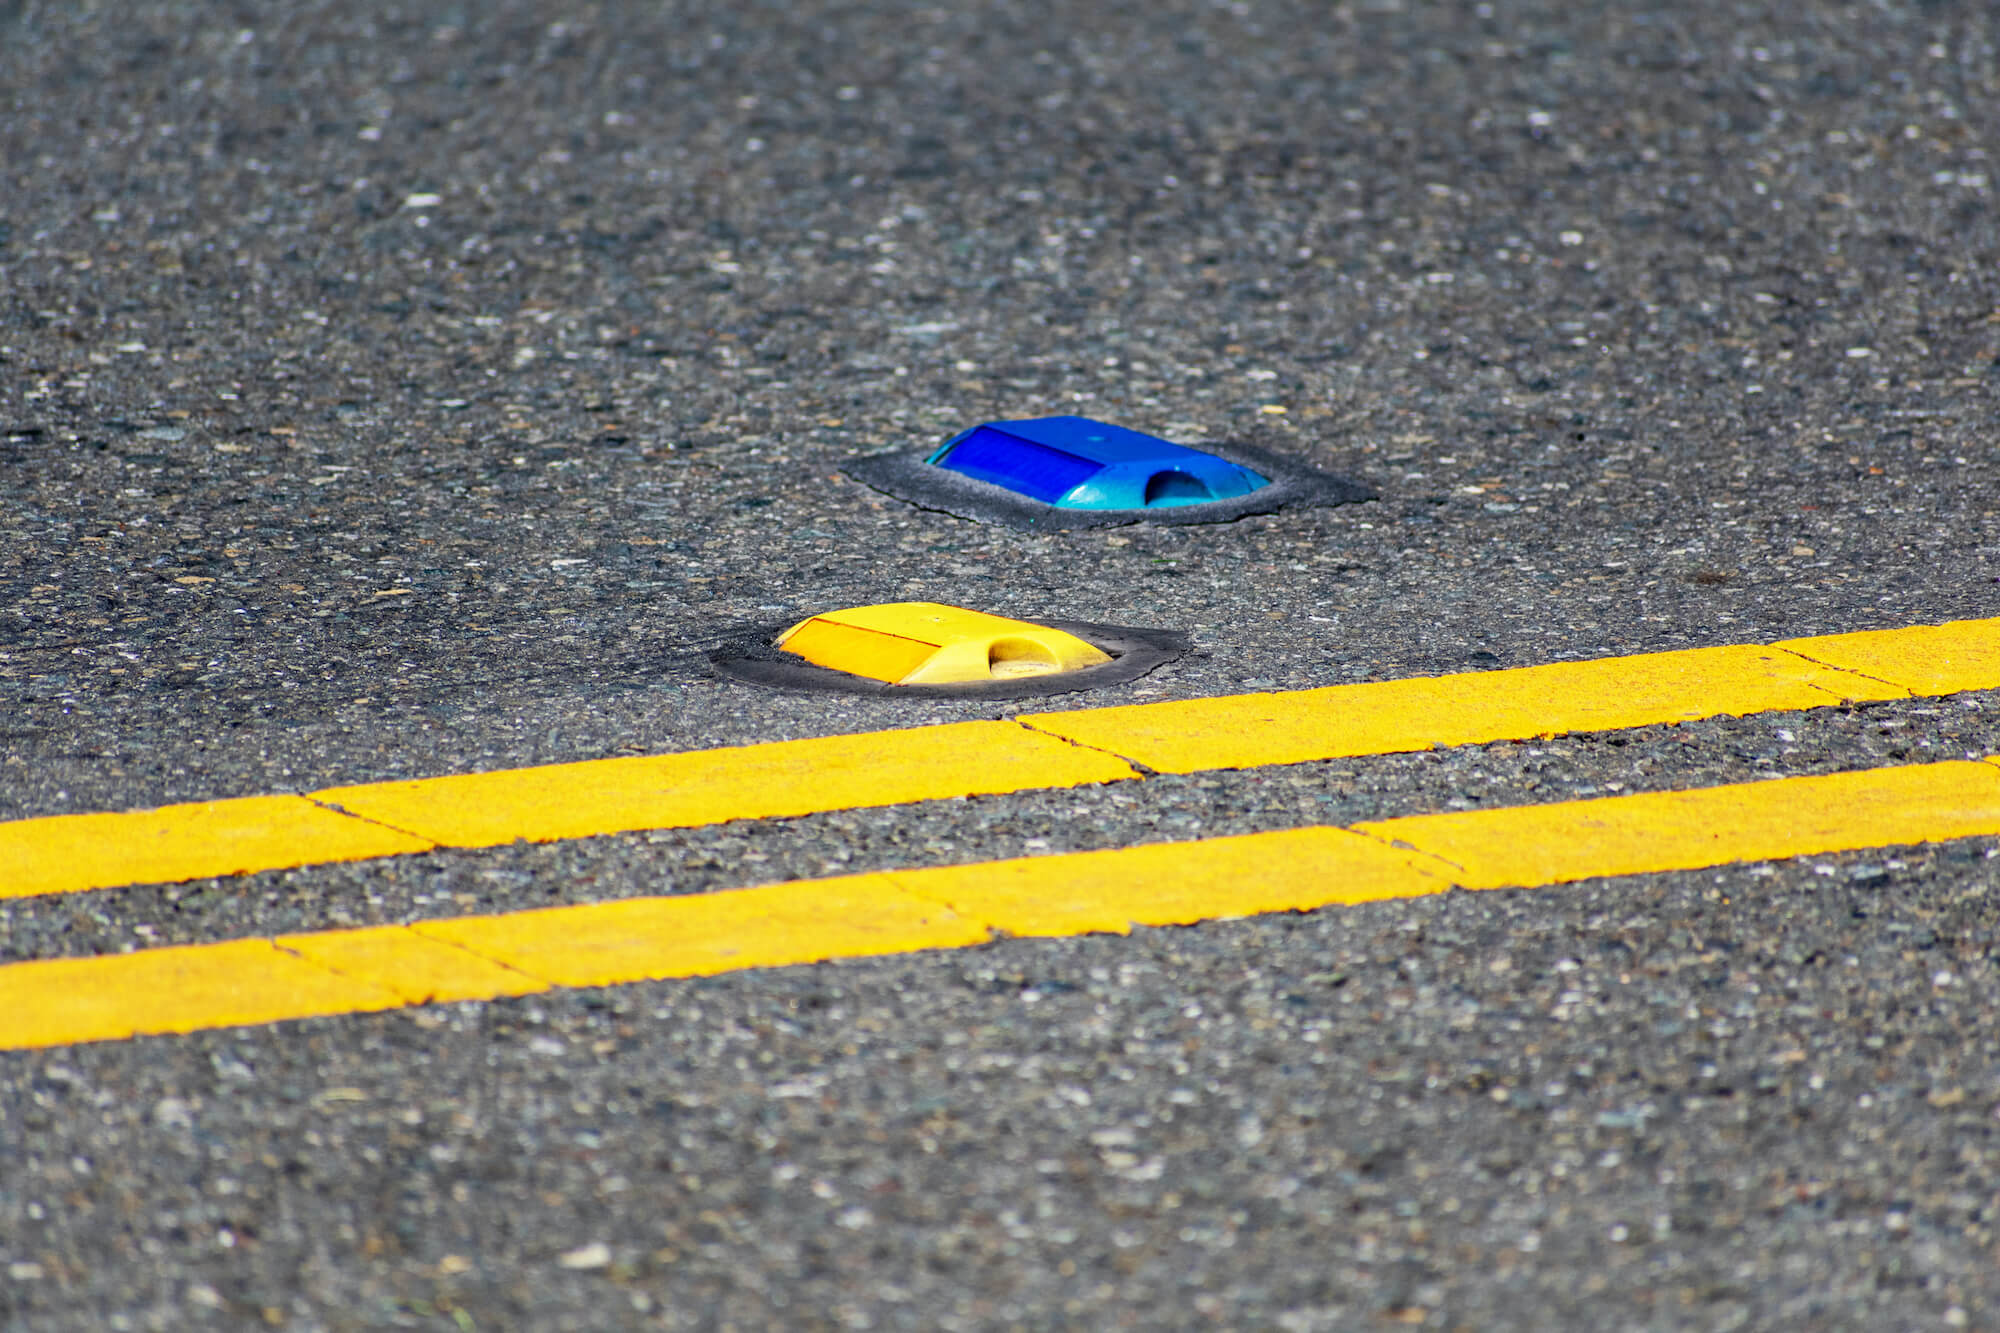 Reflective pavement markers